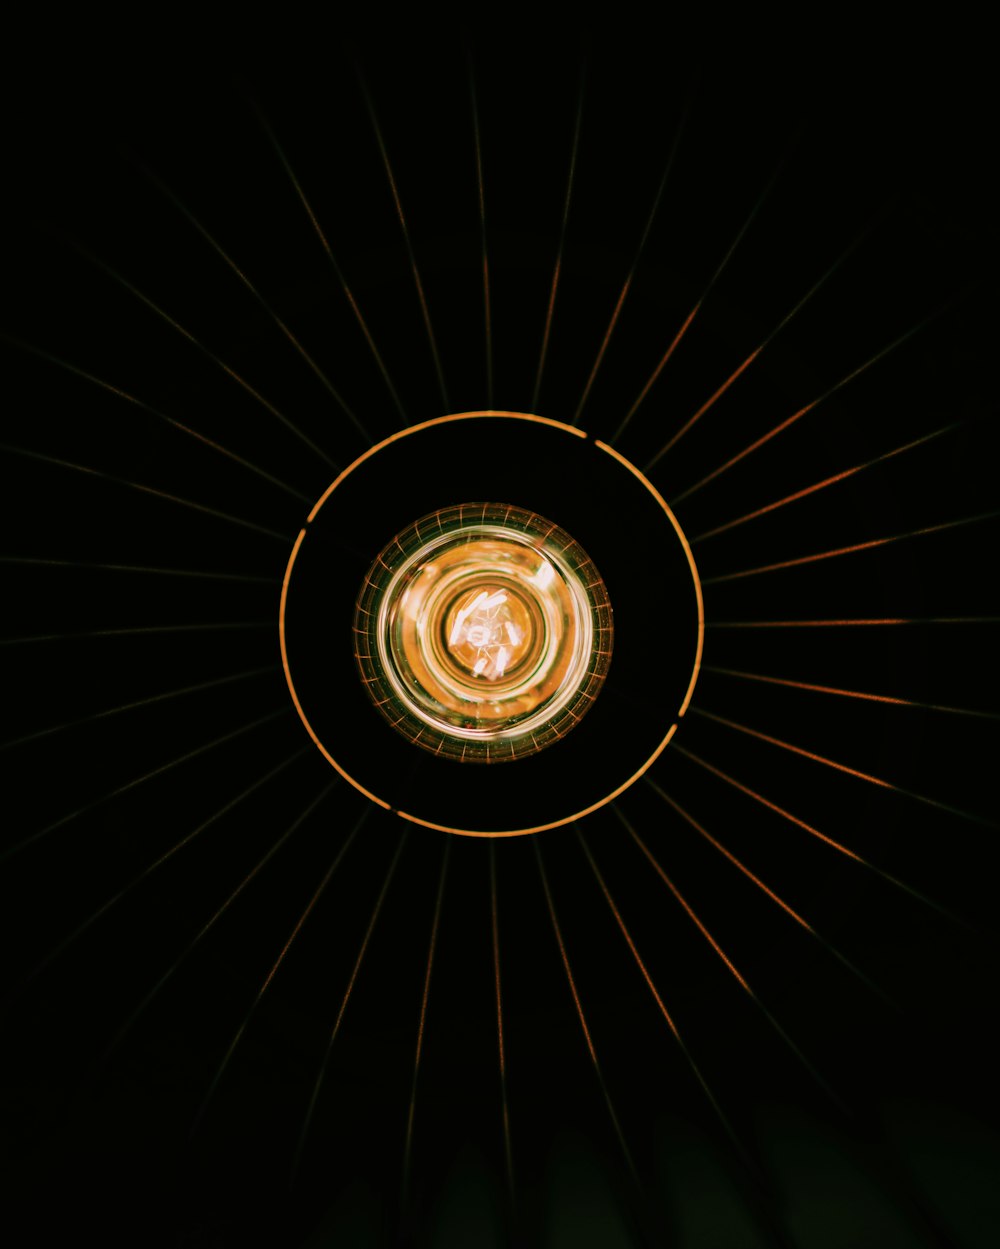 foto de foco seletivo da lâmpada